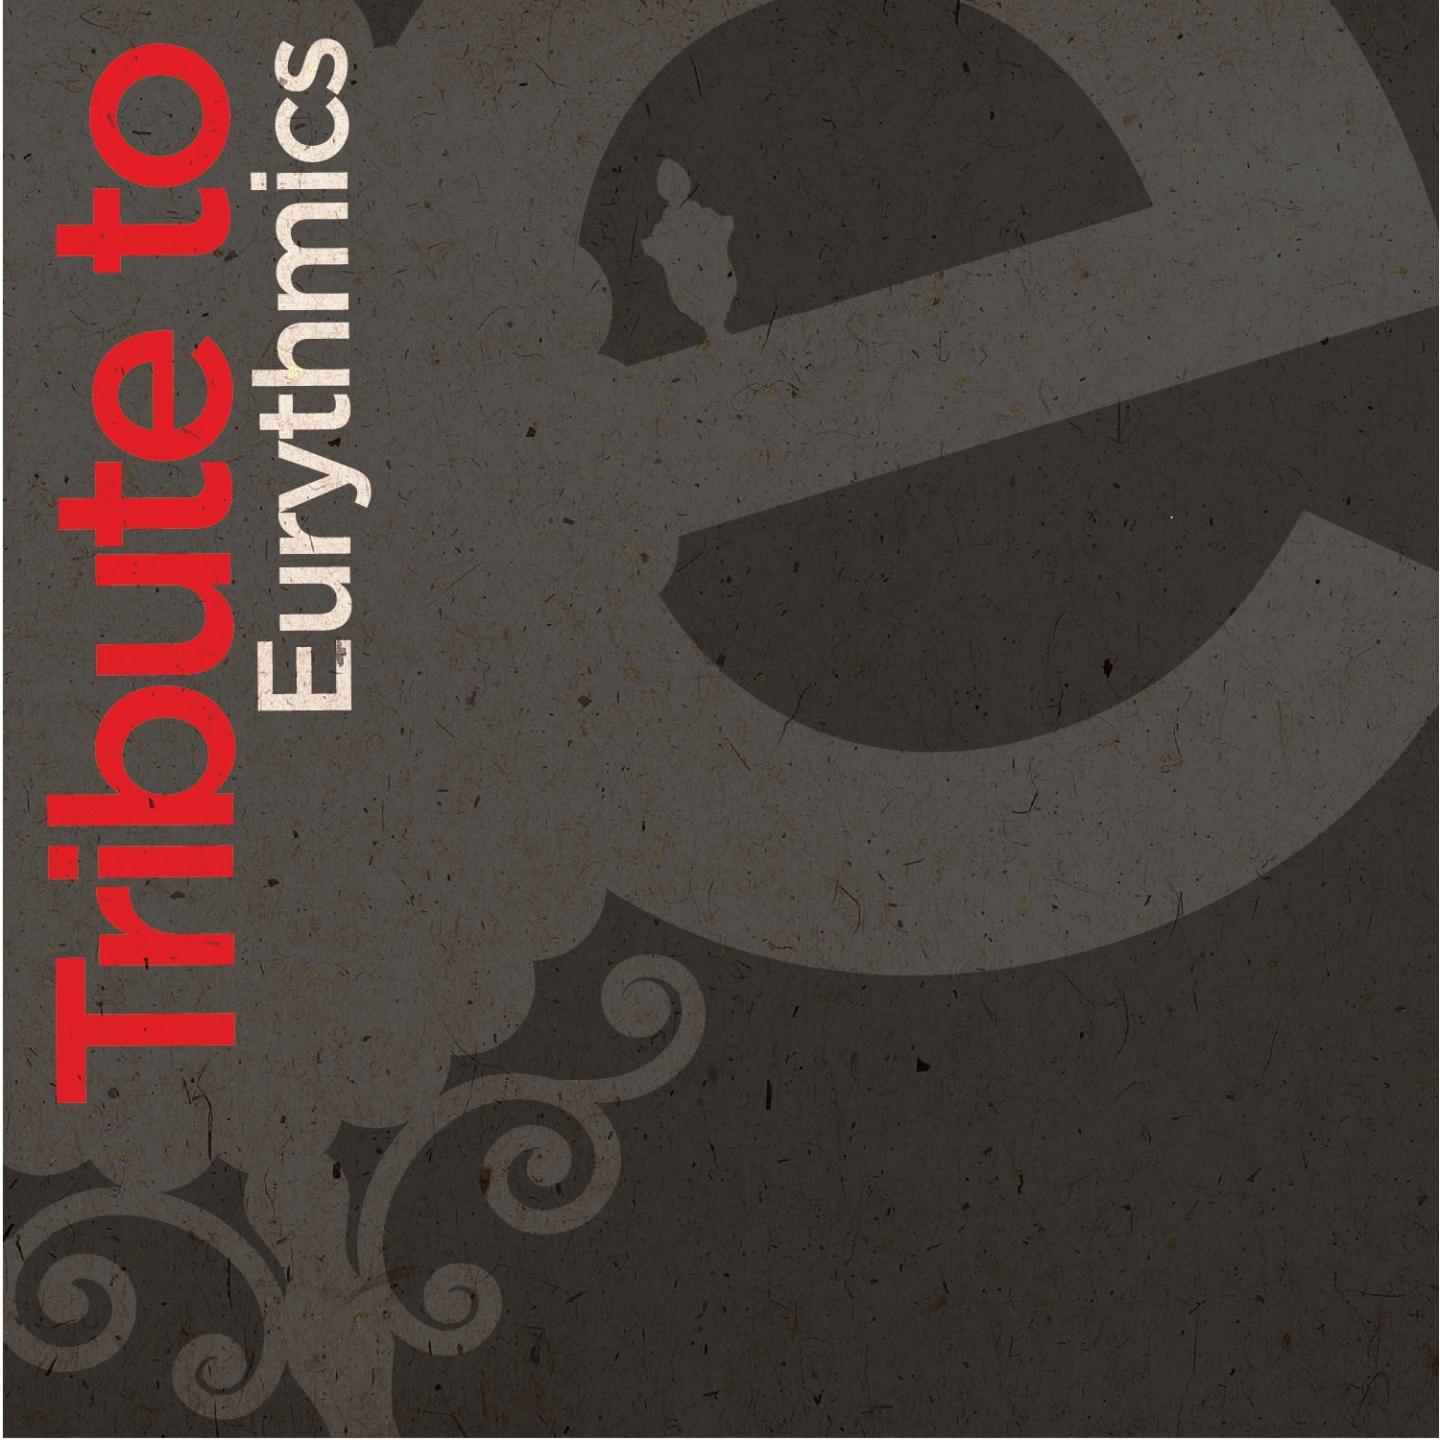 Tribute to Eurythmics